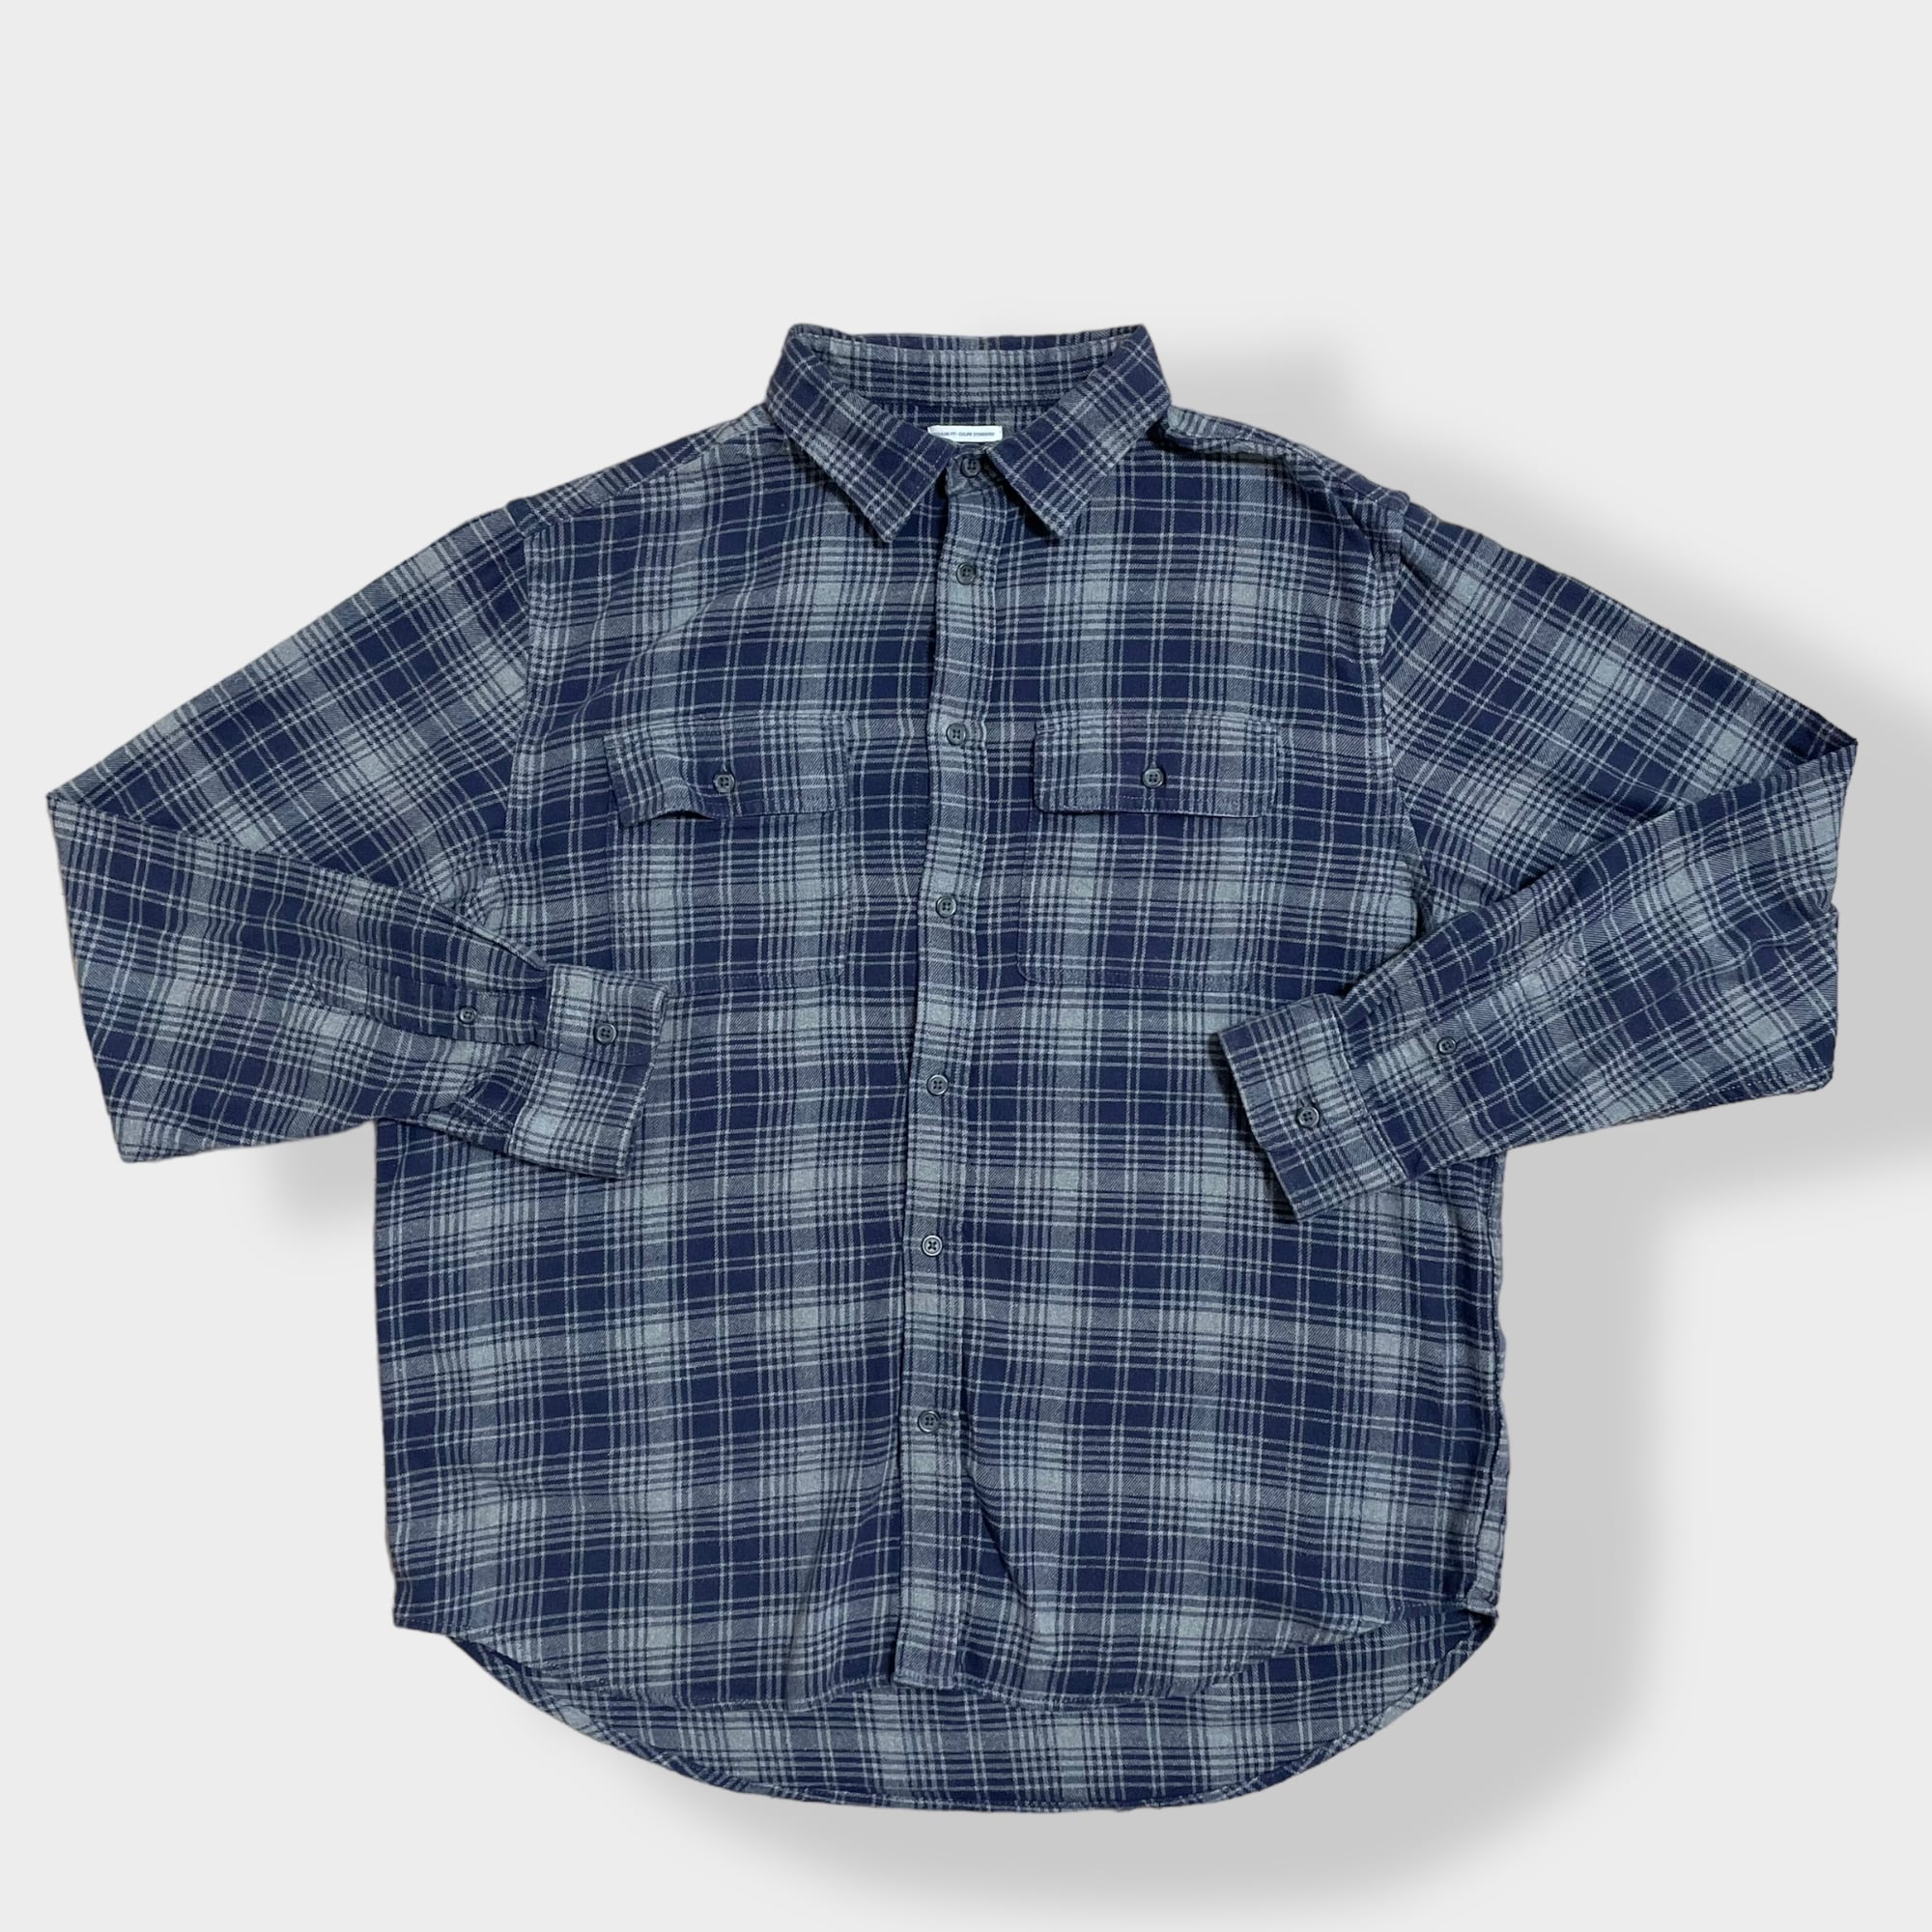 OldNavy(USA)ビンテージコットンフランネルチェックシャツ